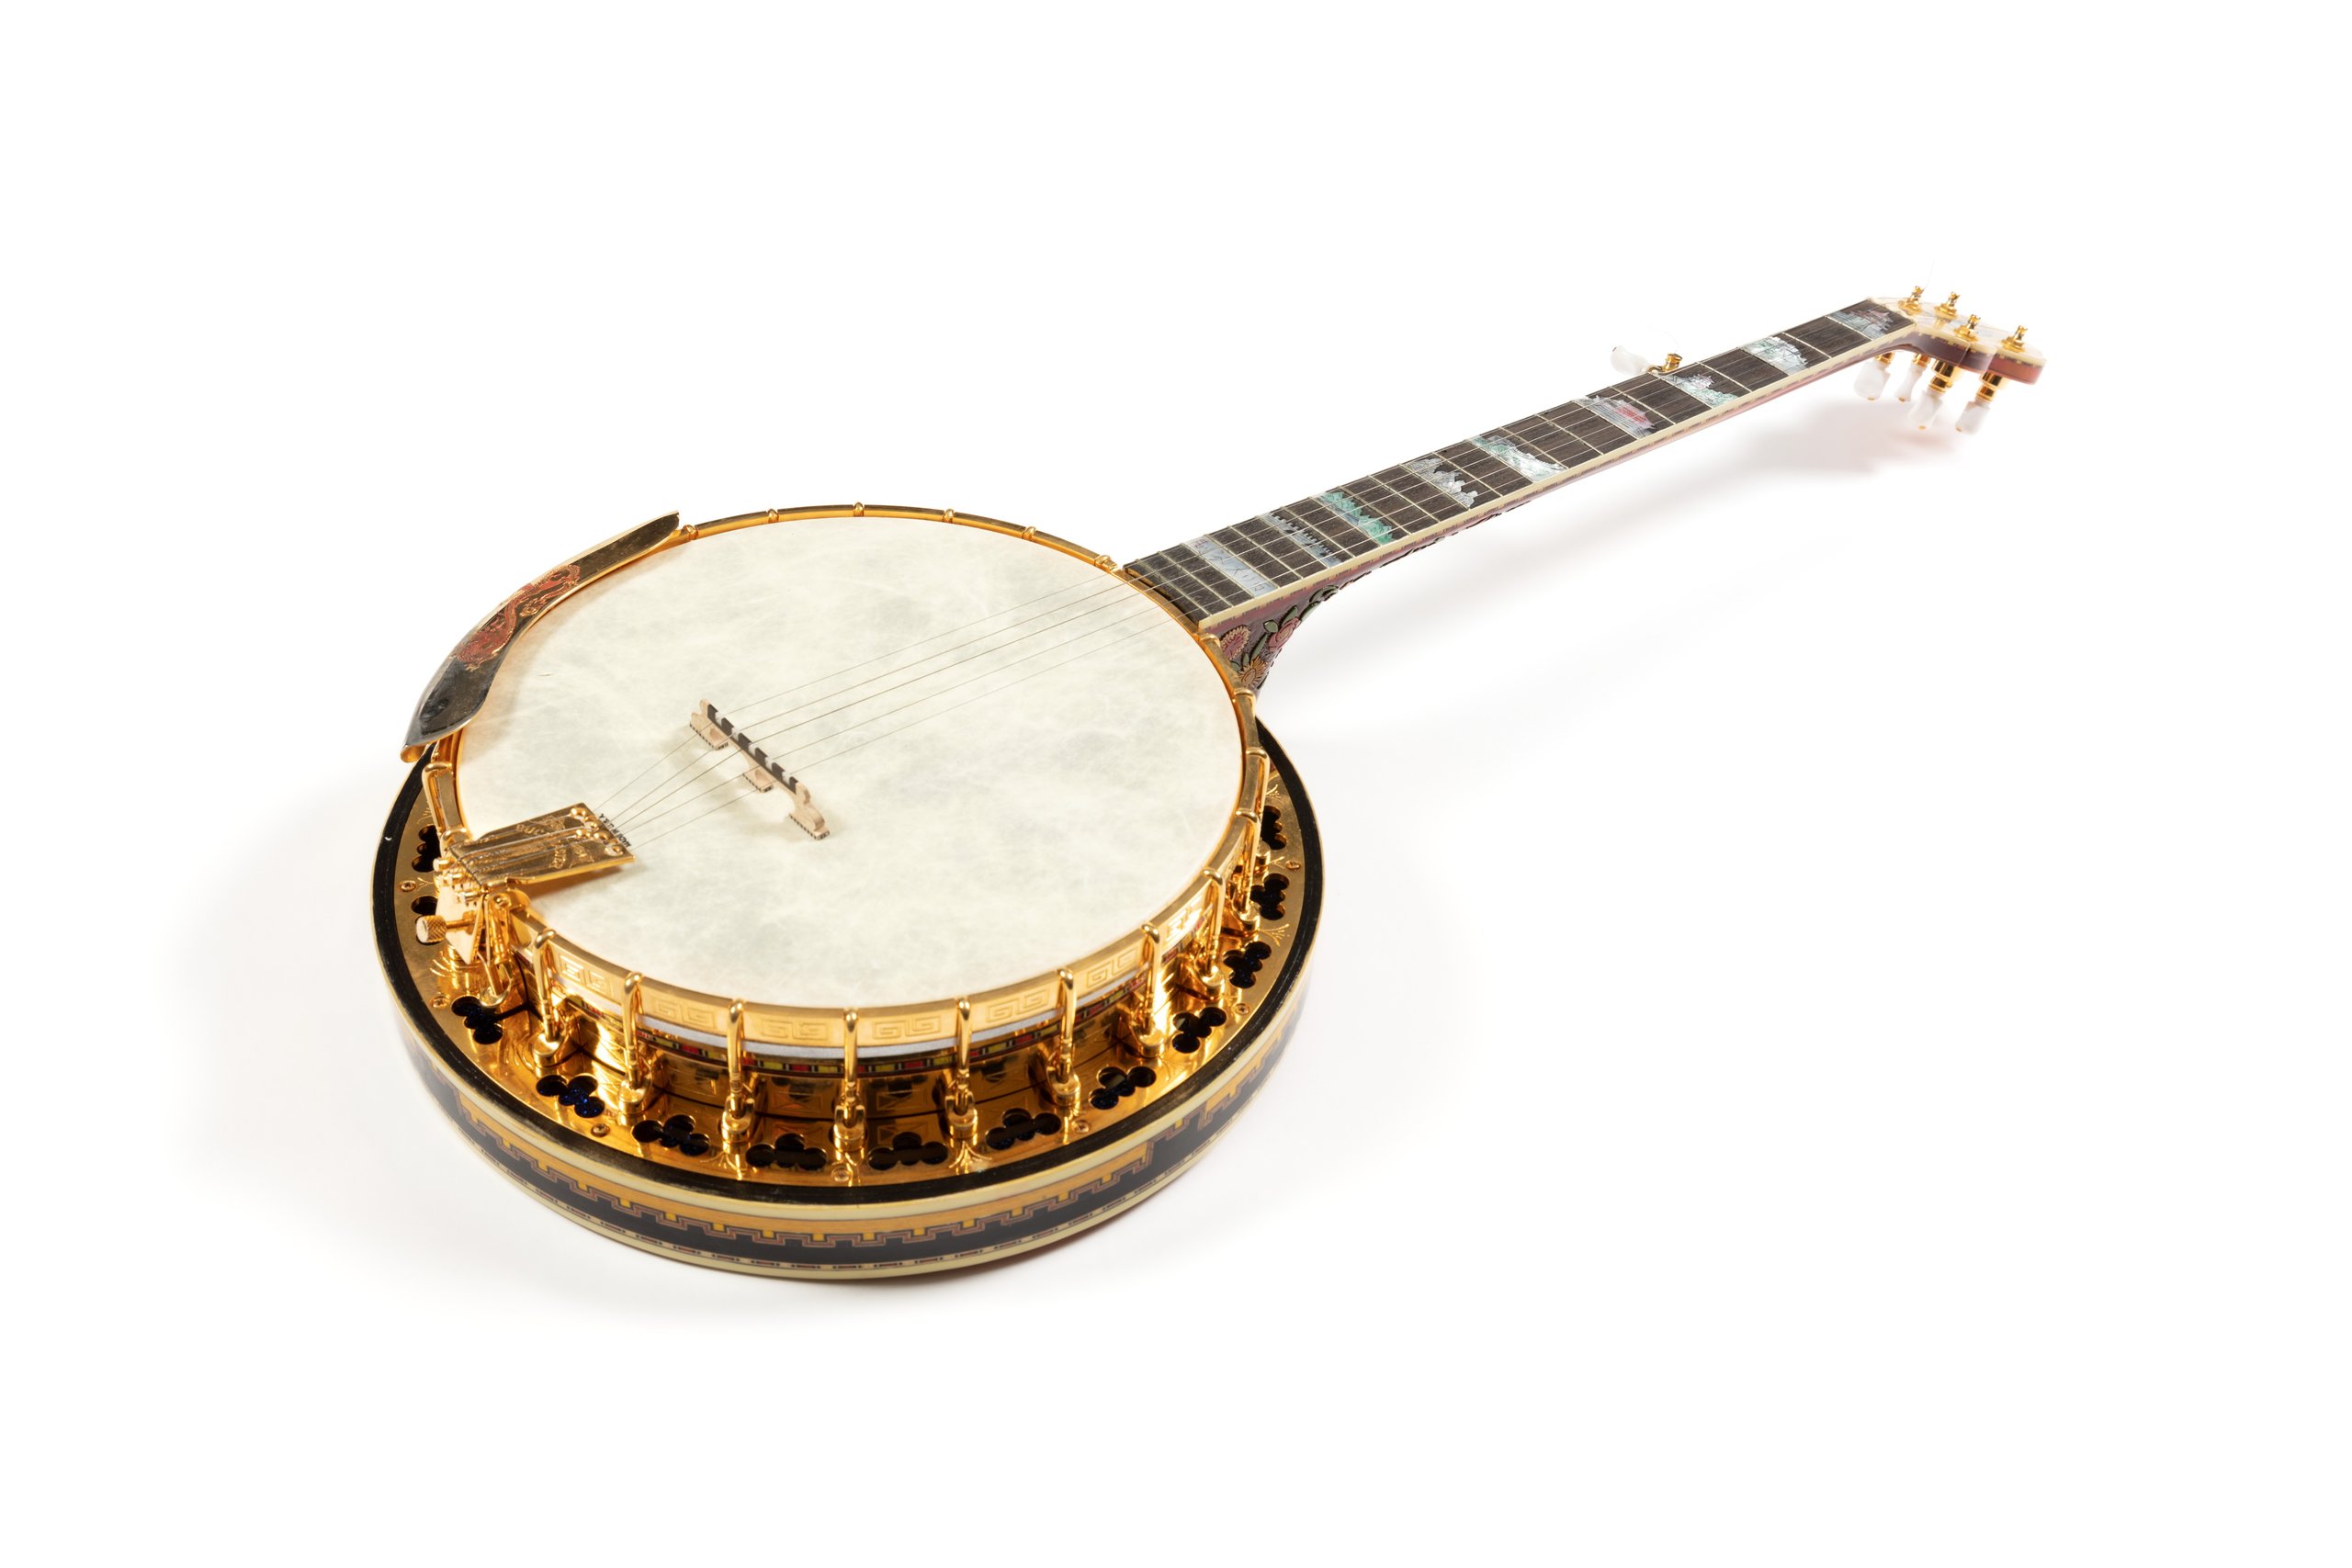 'Emperor Deluxe' five string banjo made by Roger Buckmaster